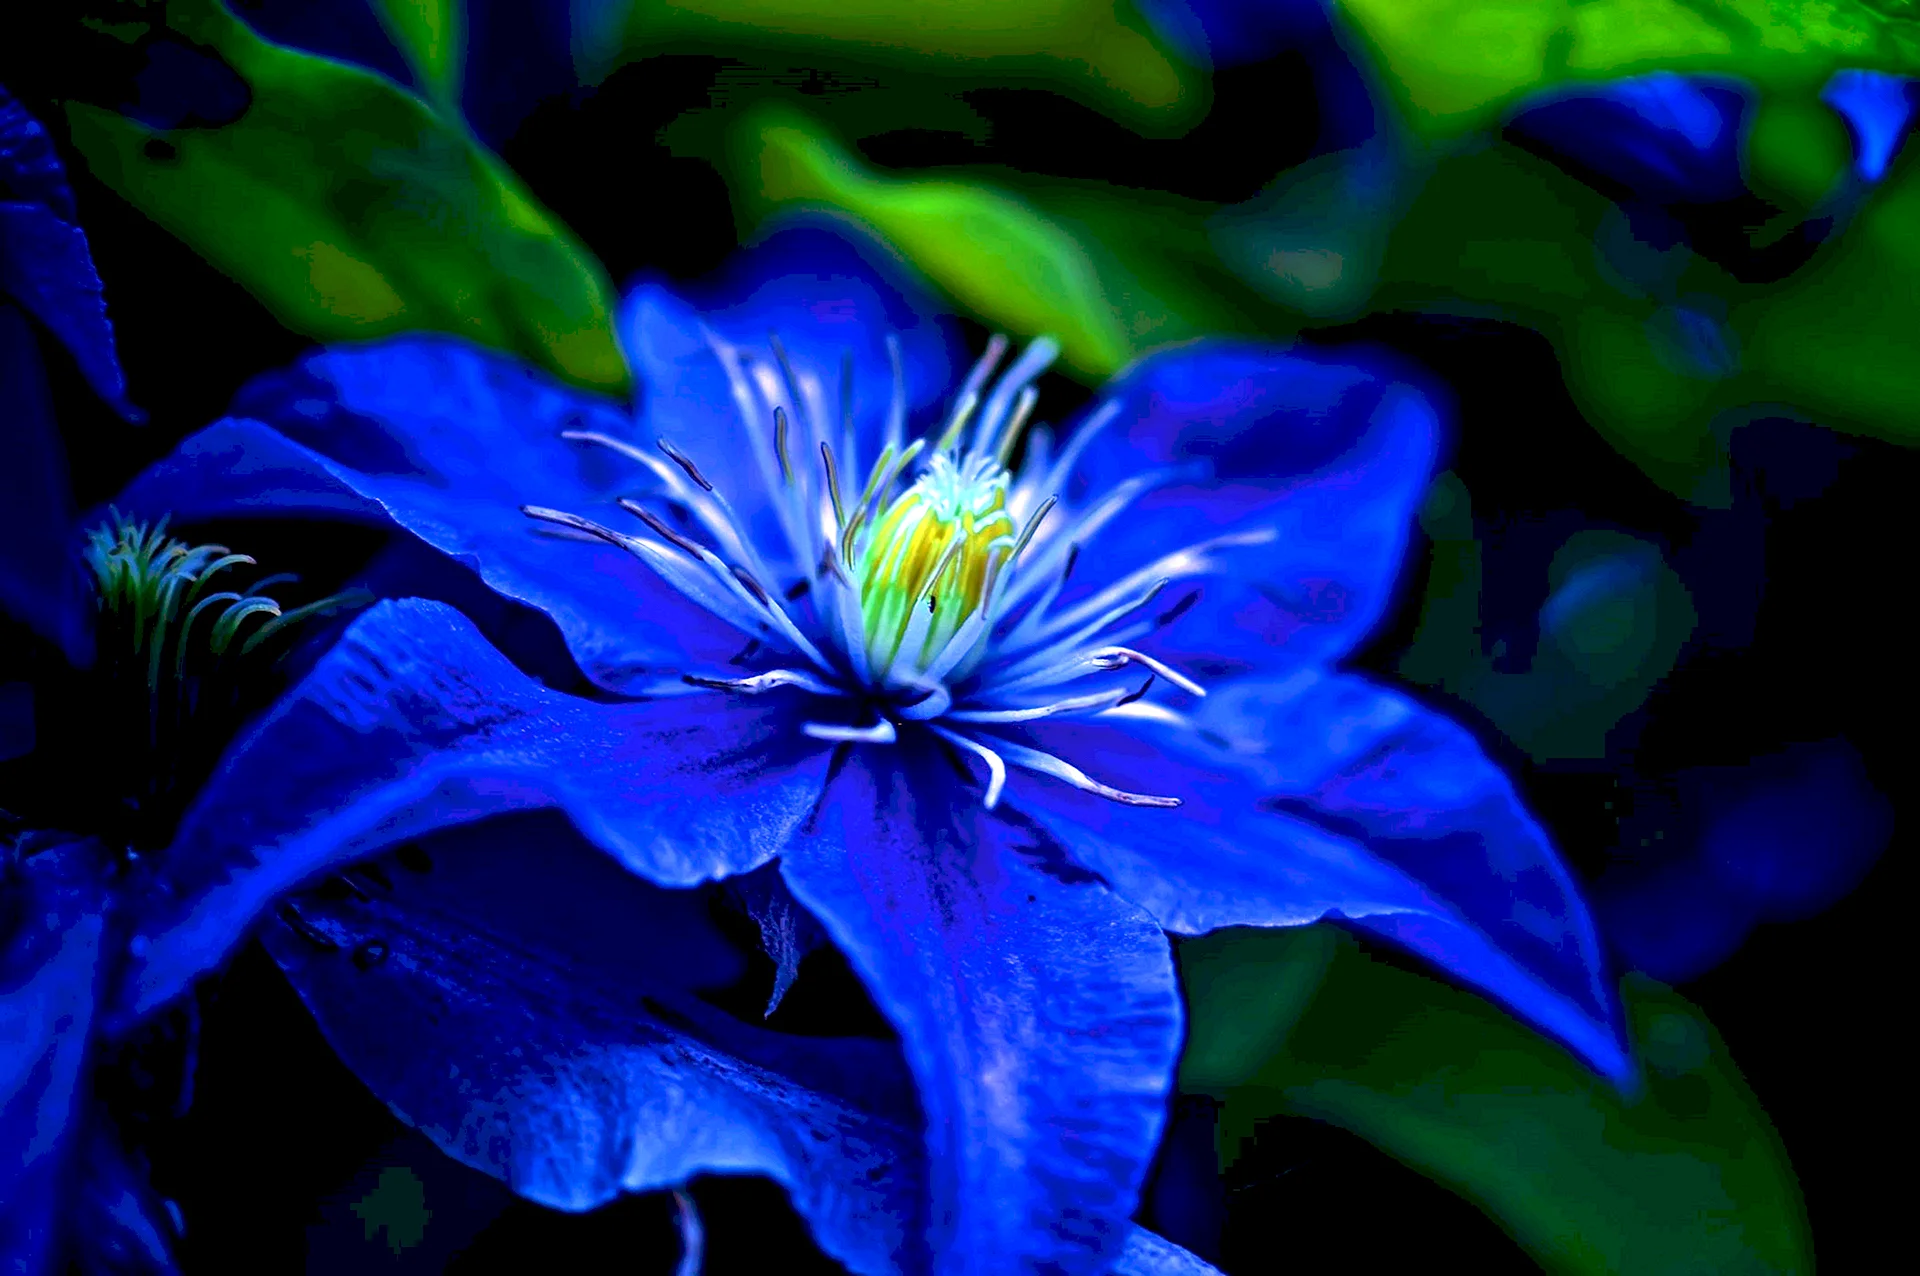 Dark Blue Flower Wallpaper